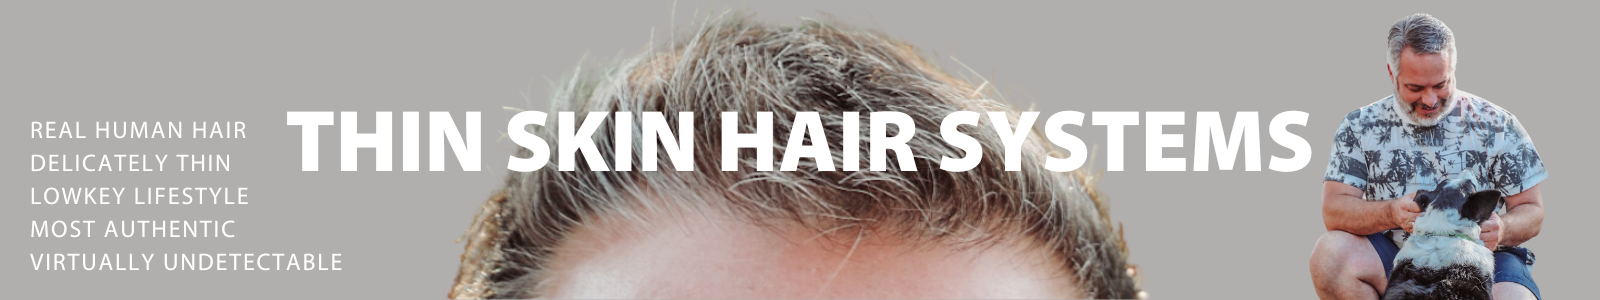 MEN'S THIN SKIN HAIR SYSTEMS